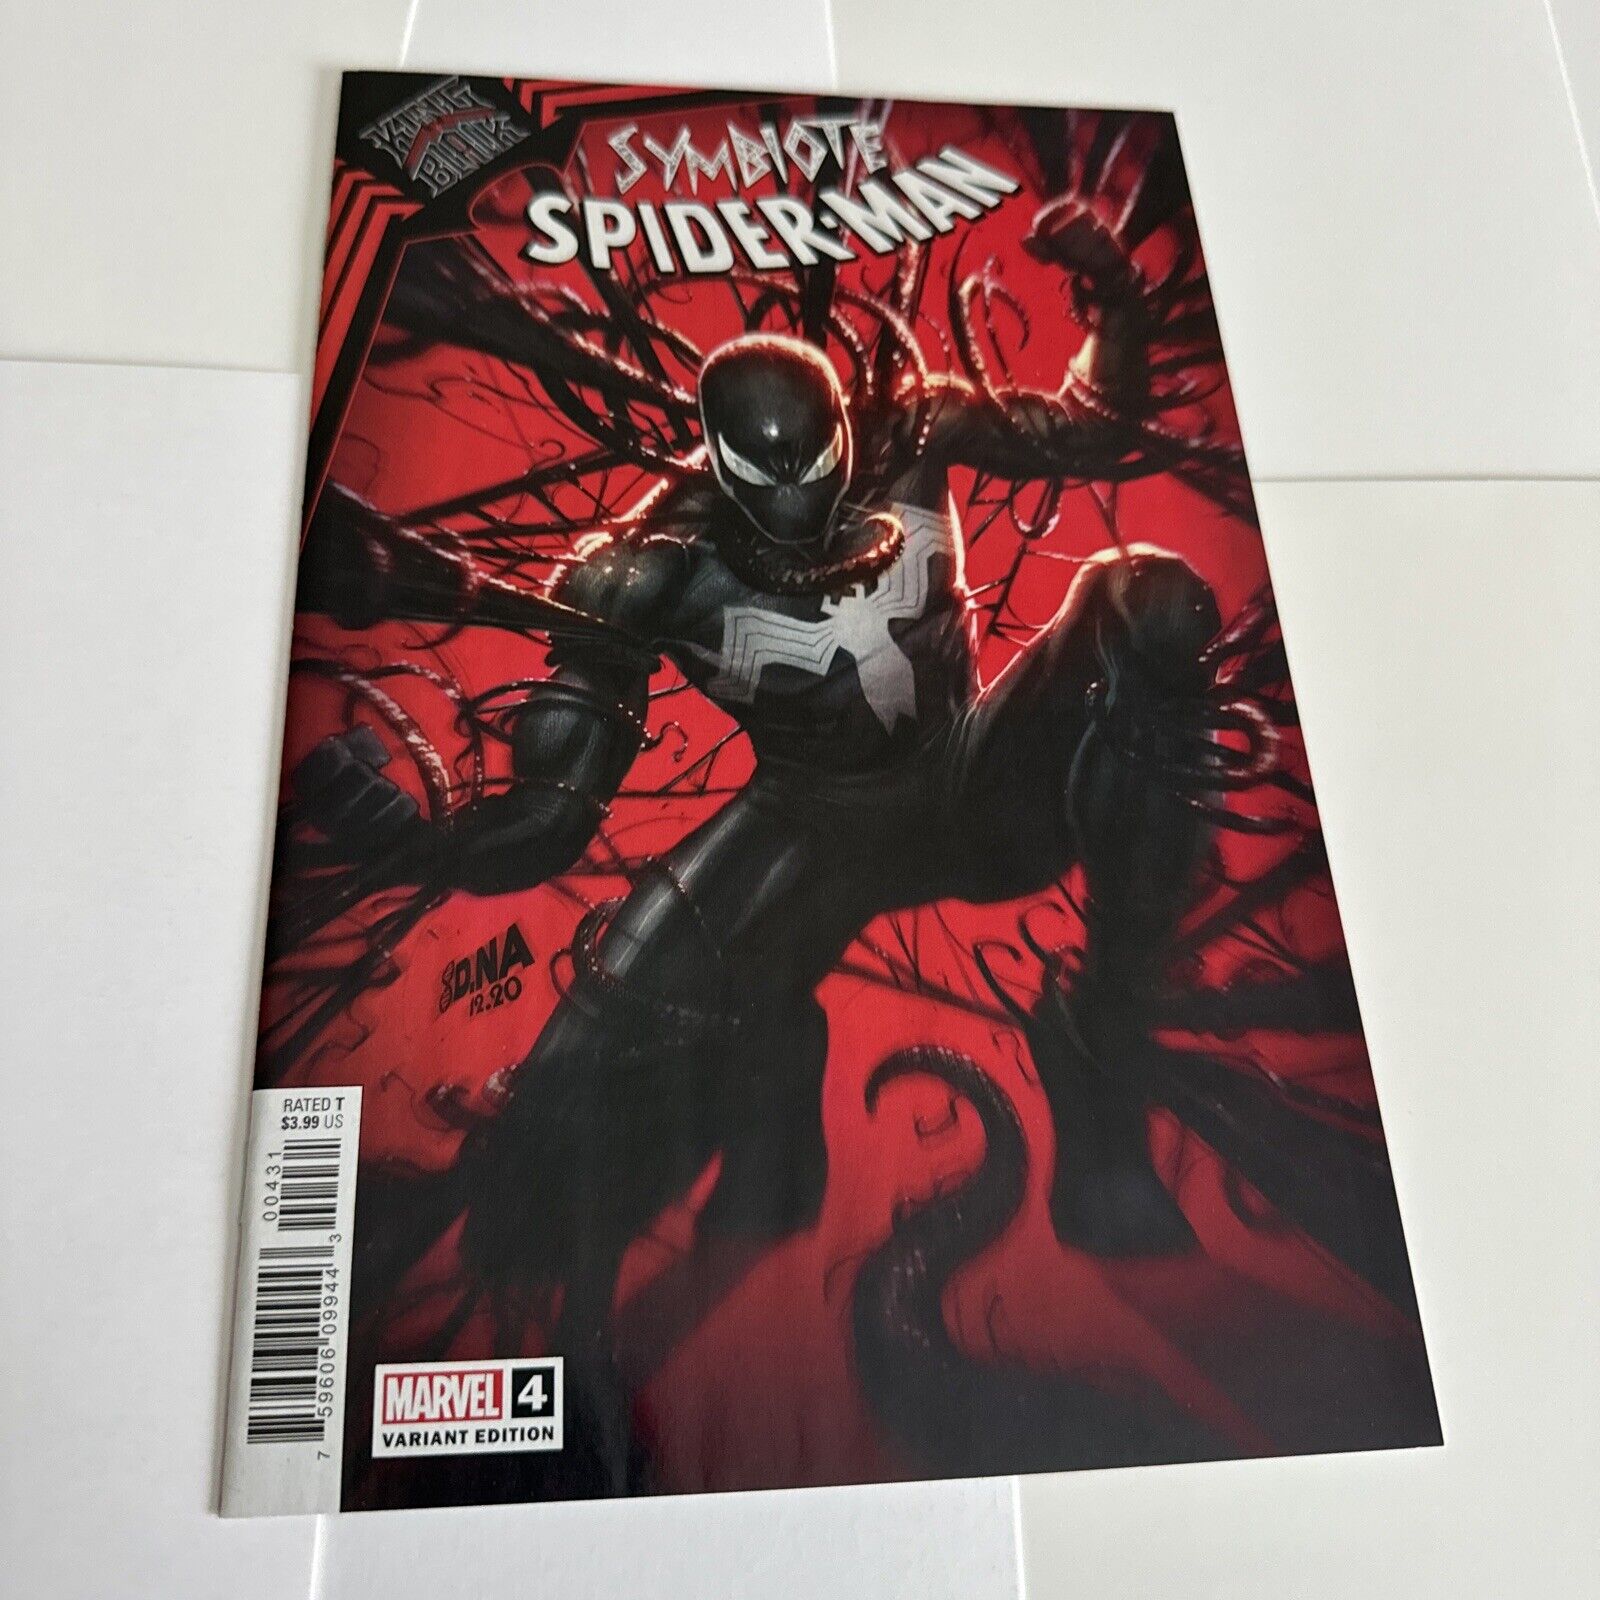 Symbiote Spider-Man King in Black # 4 Nakayama Variant Cover NM Marvel